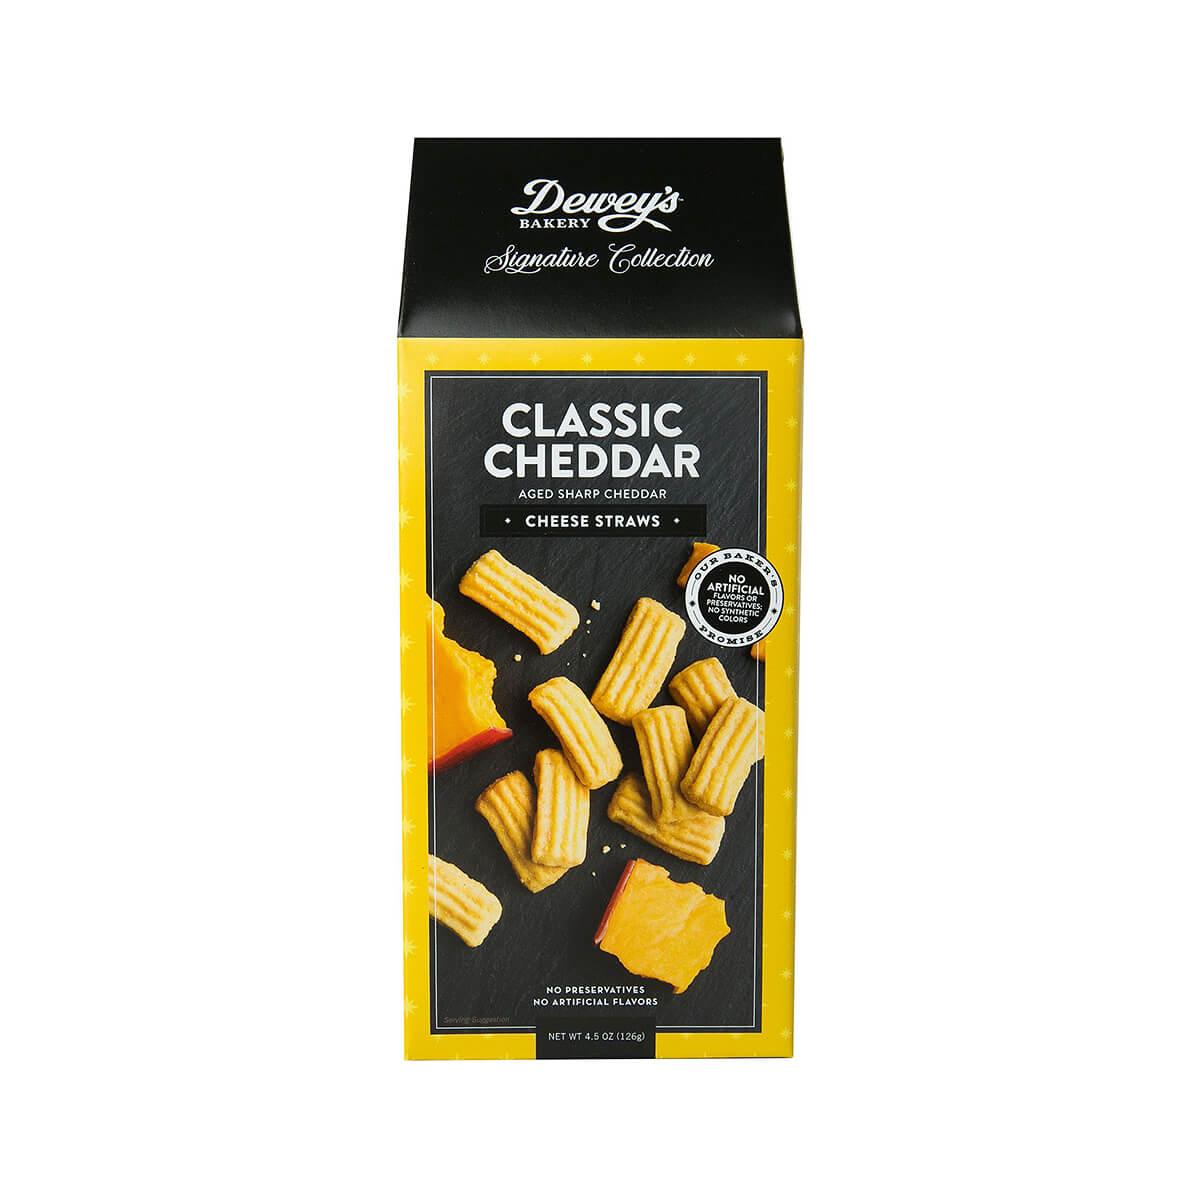  Classic Cheddar Cheese Straws